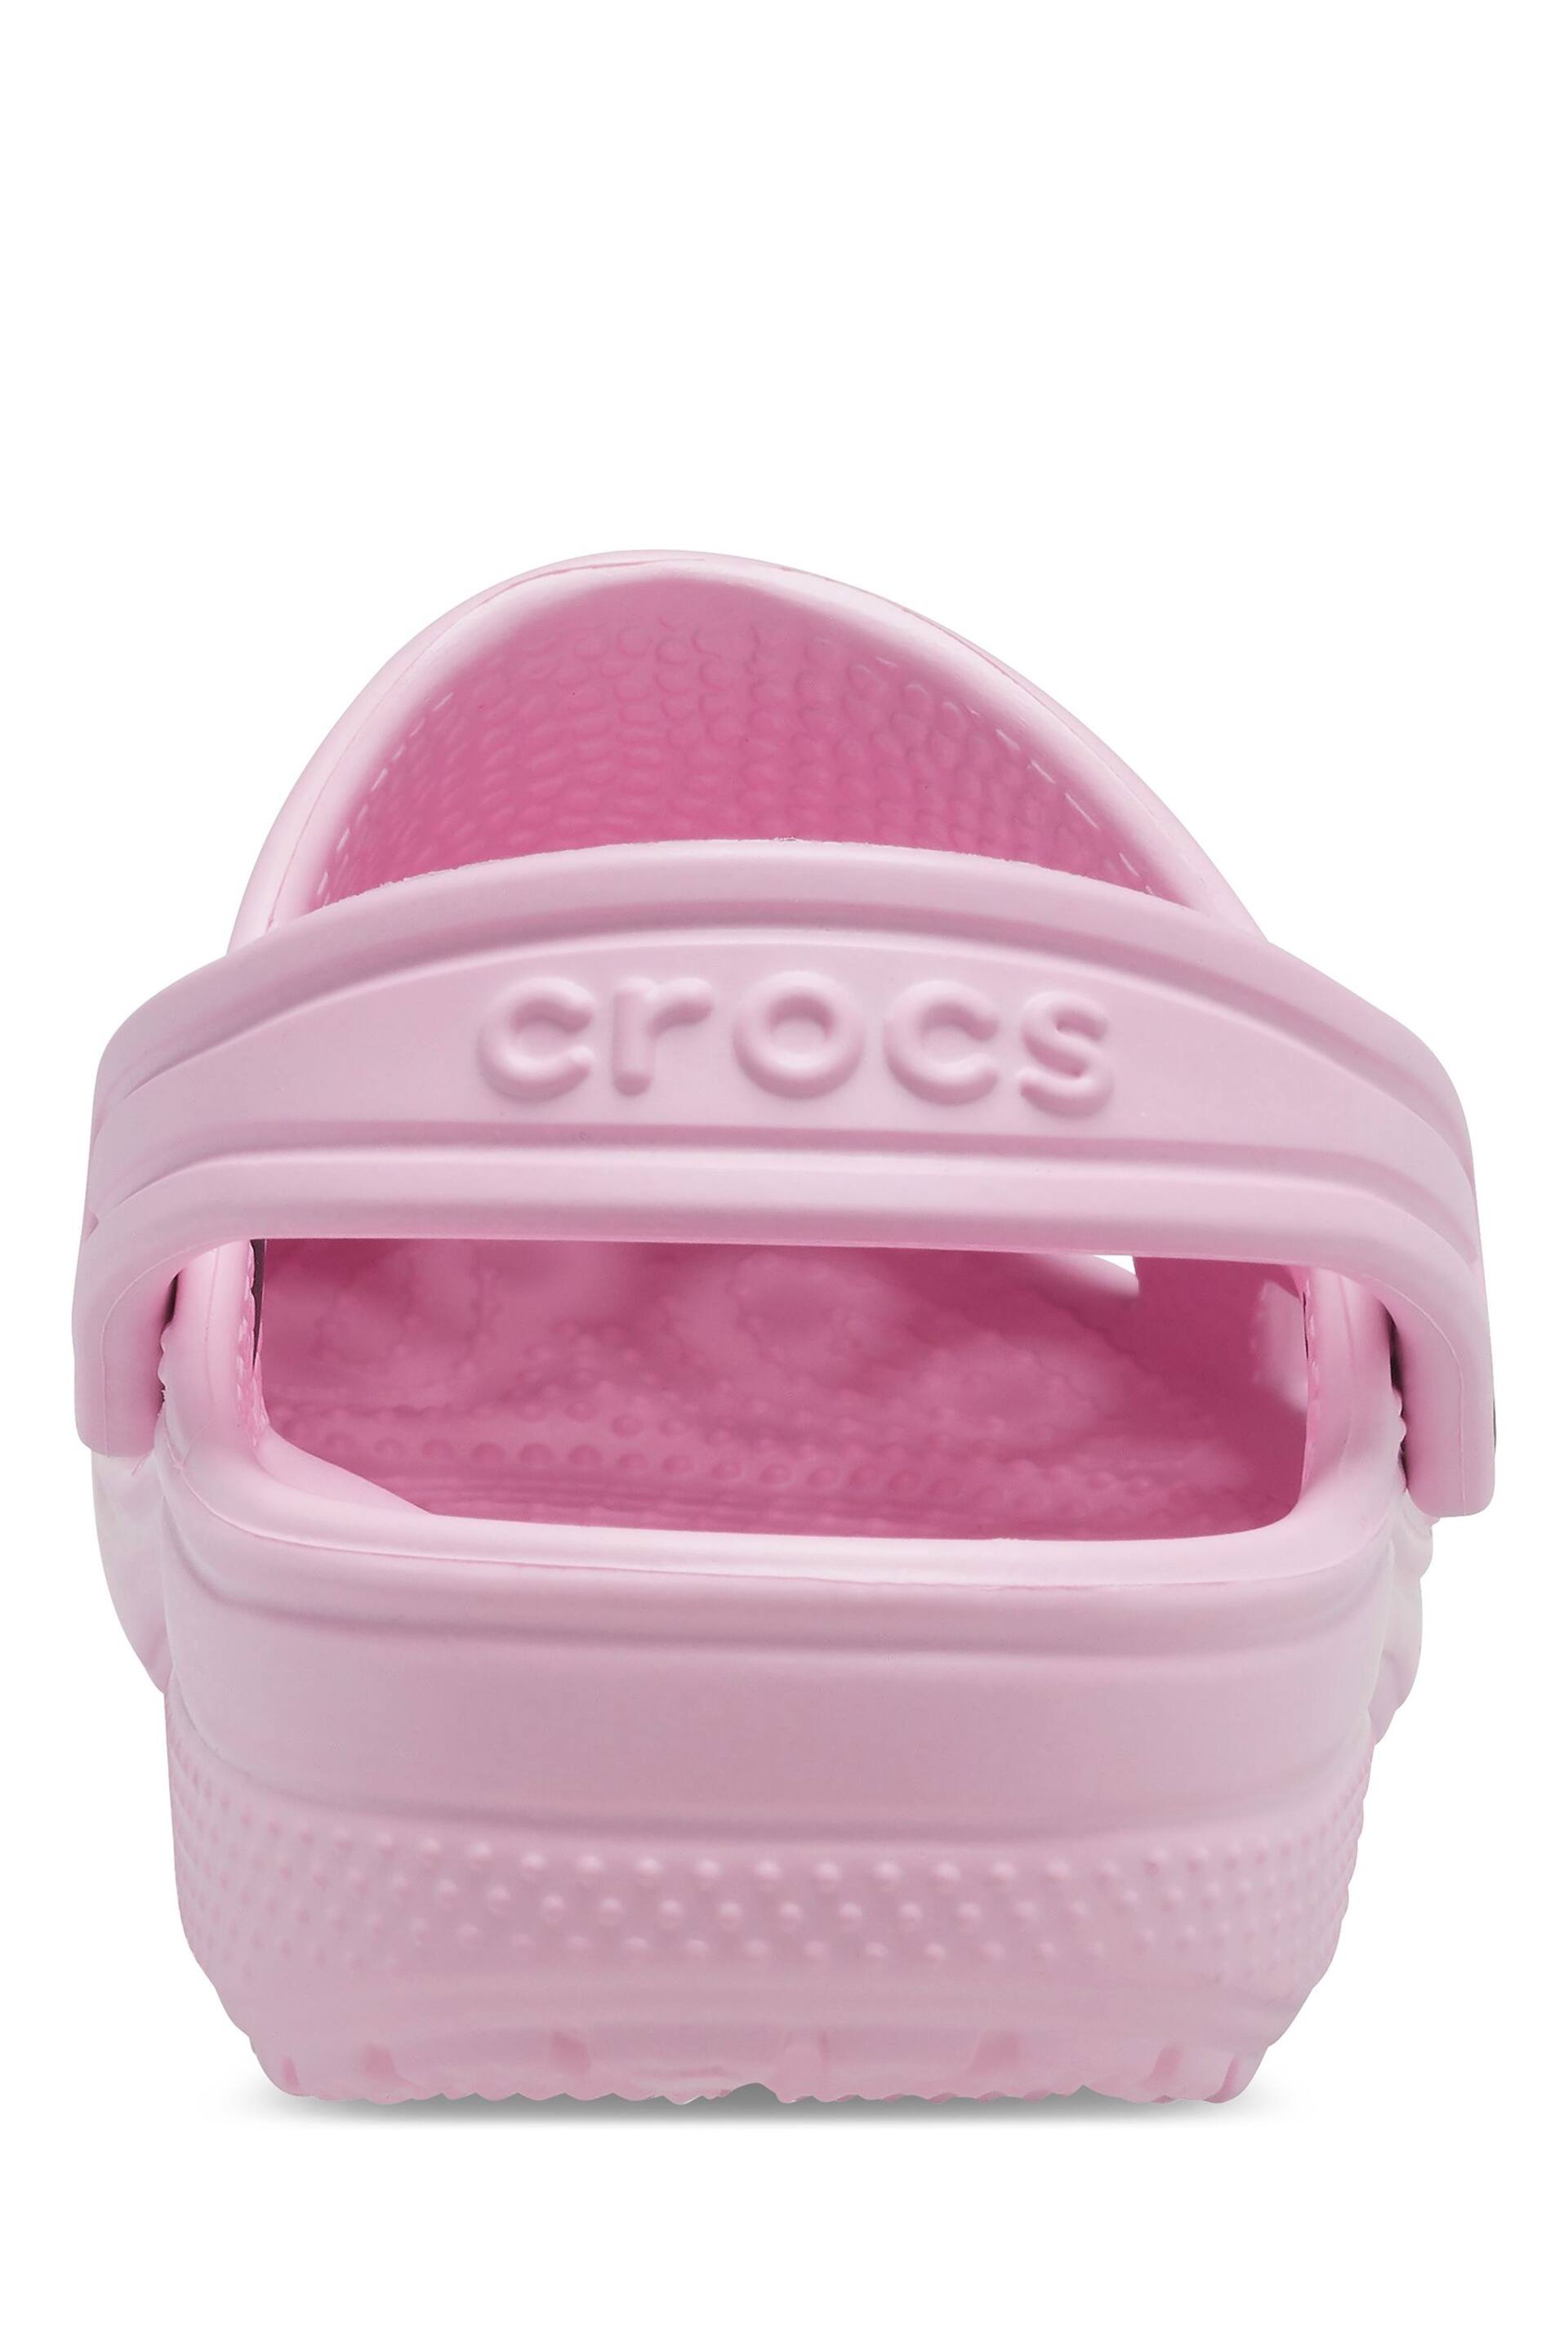 Crocs Kids Classic Unisex Clogs - Image 2 of 8